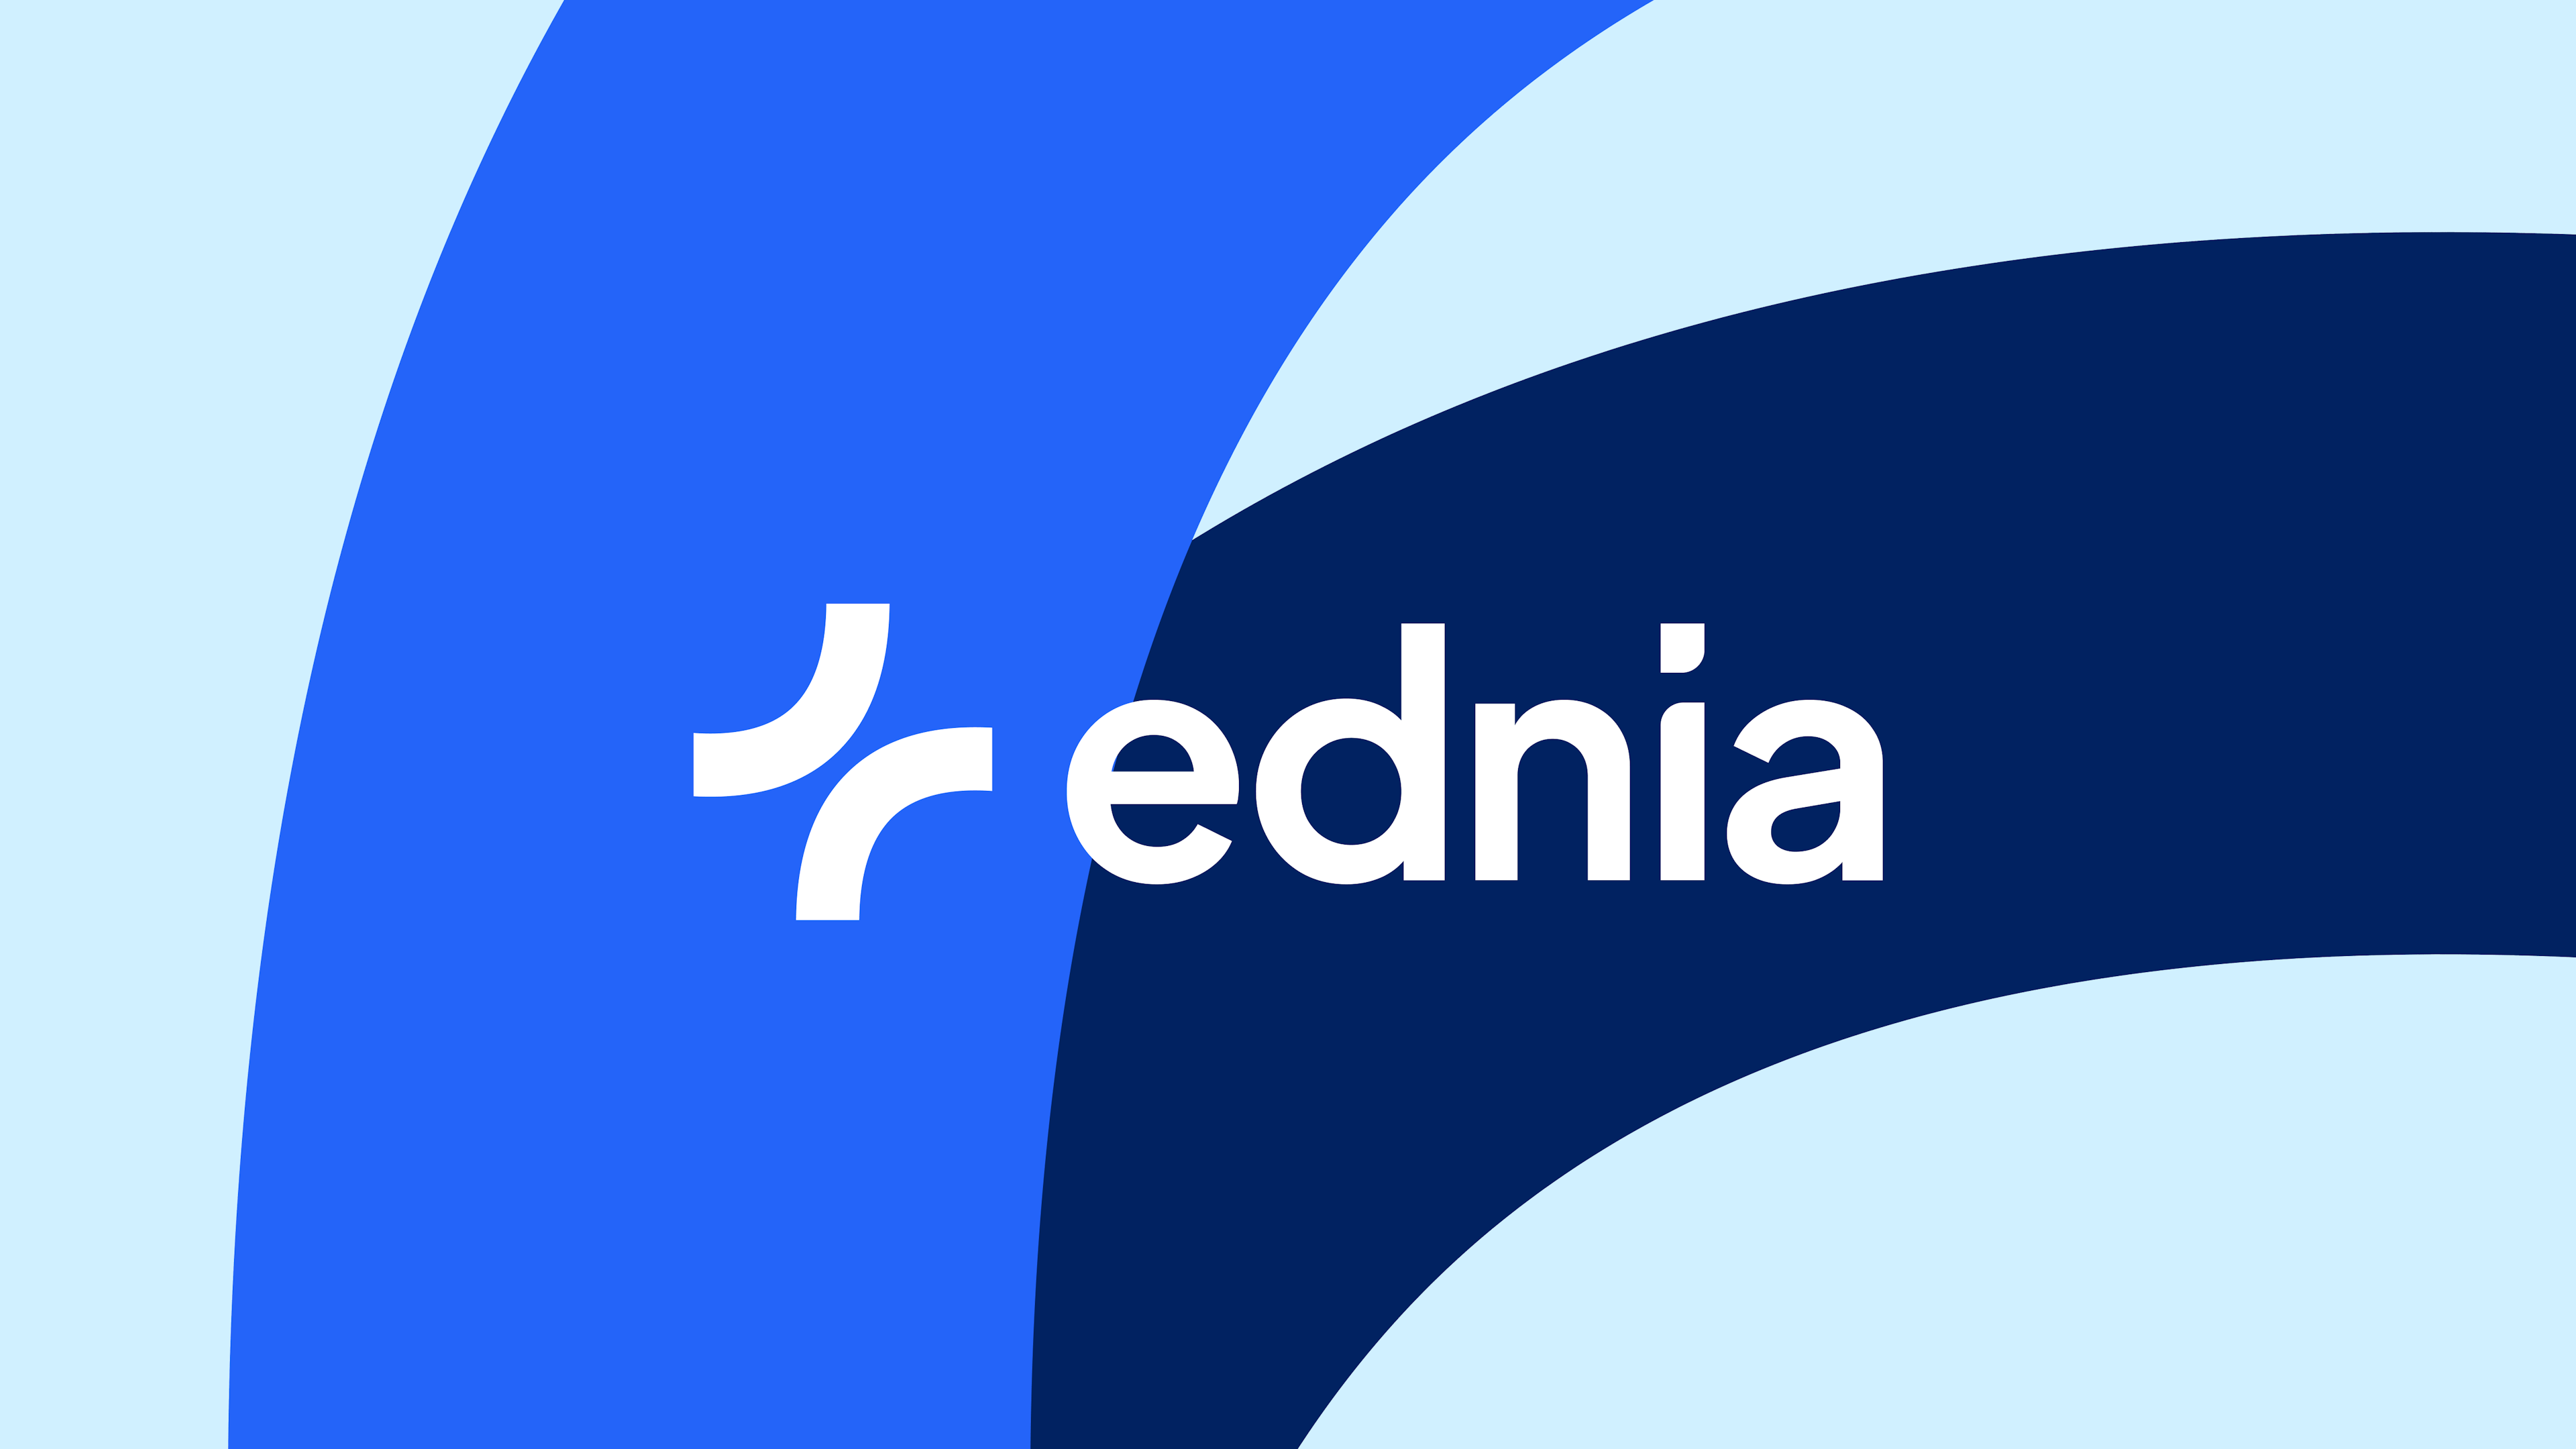 Ednia logo with background.